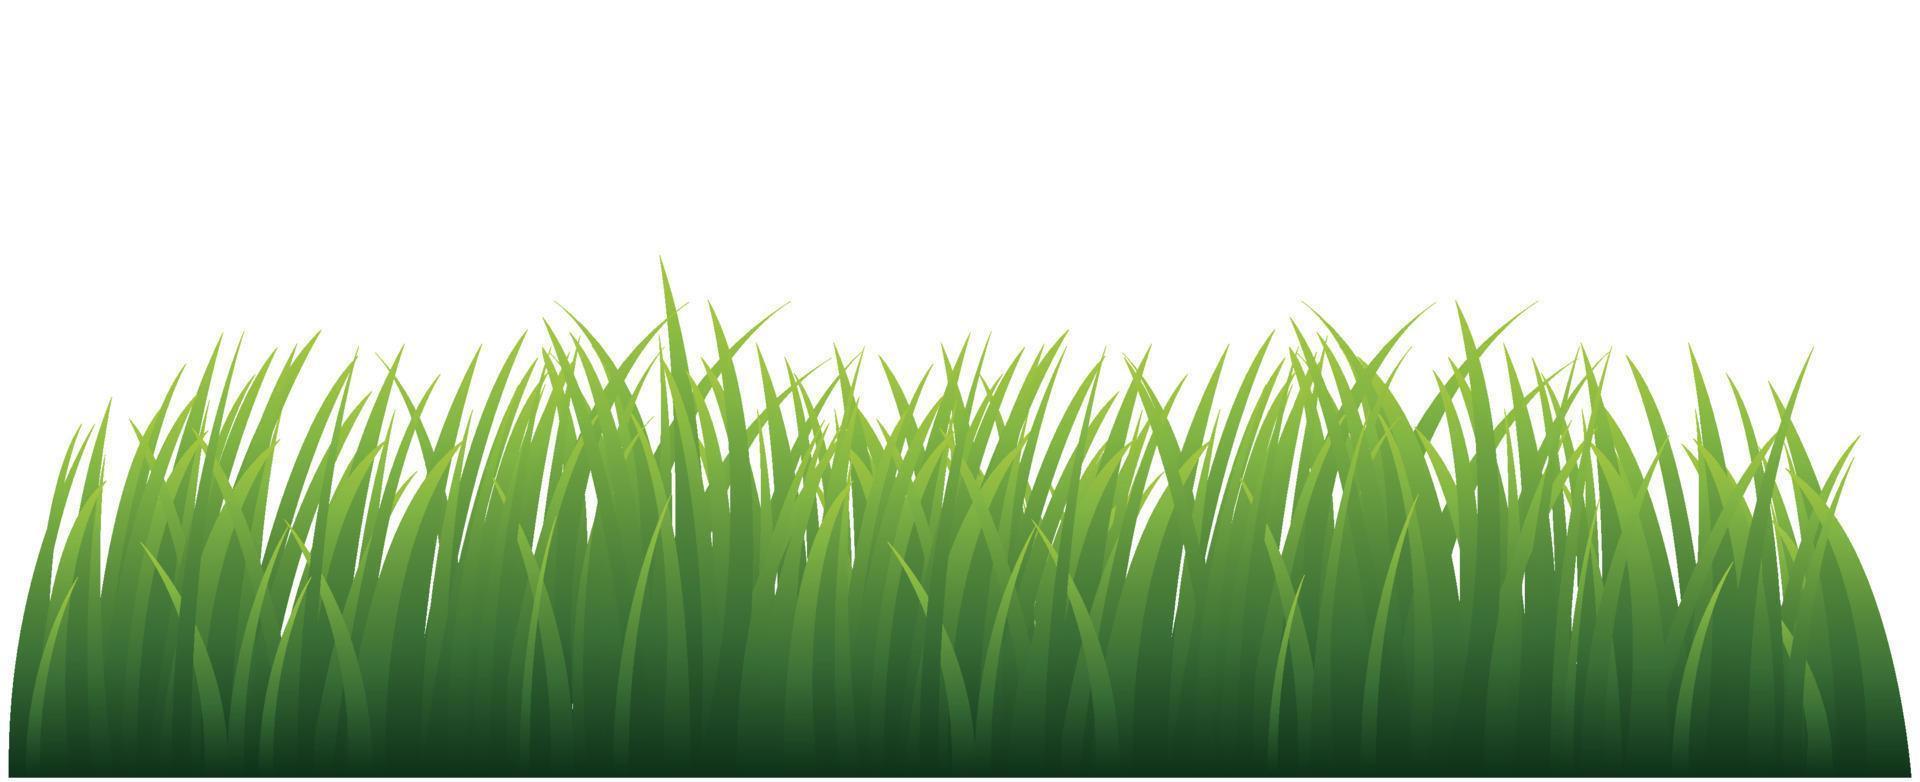 grönt gräs. vektor illustration.